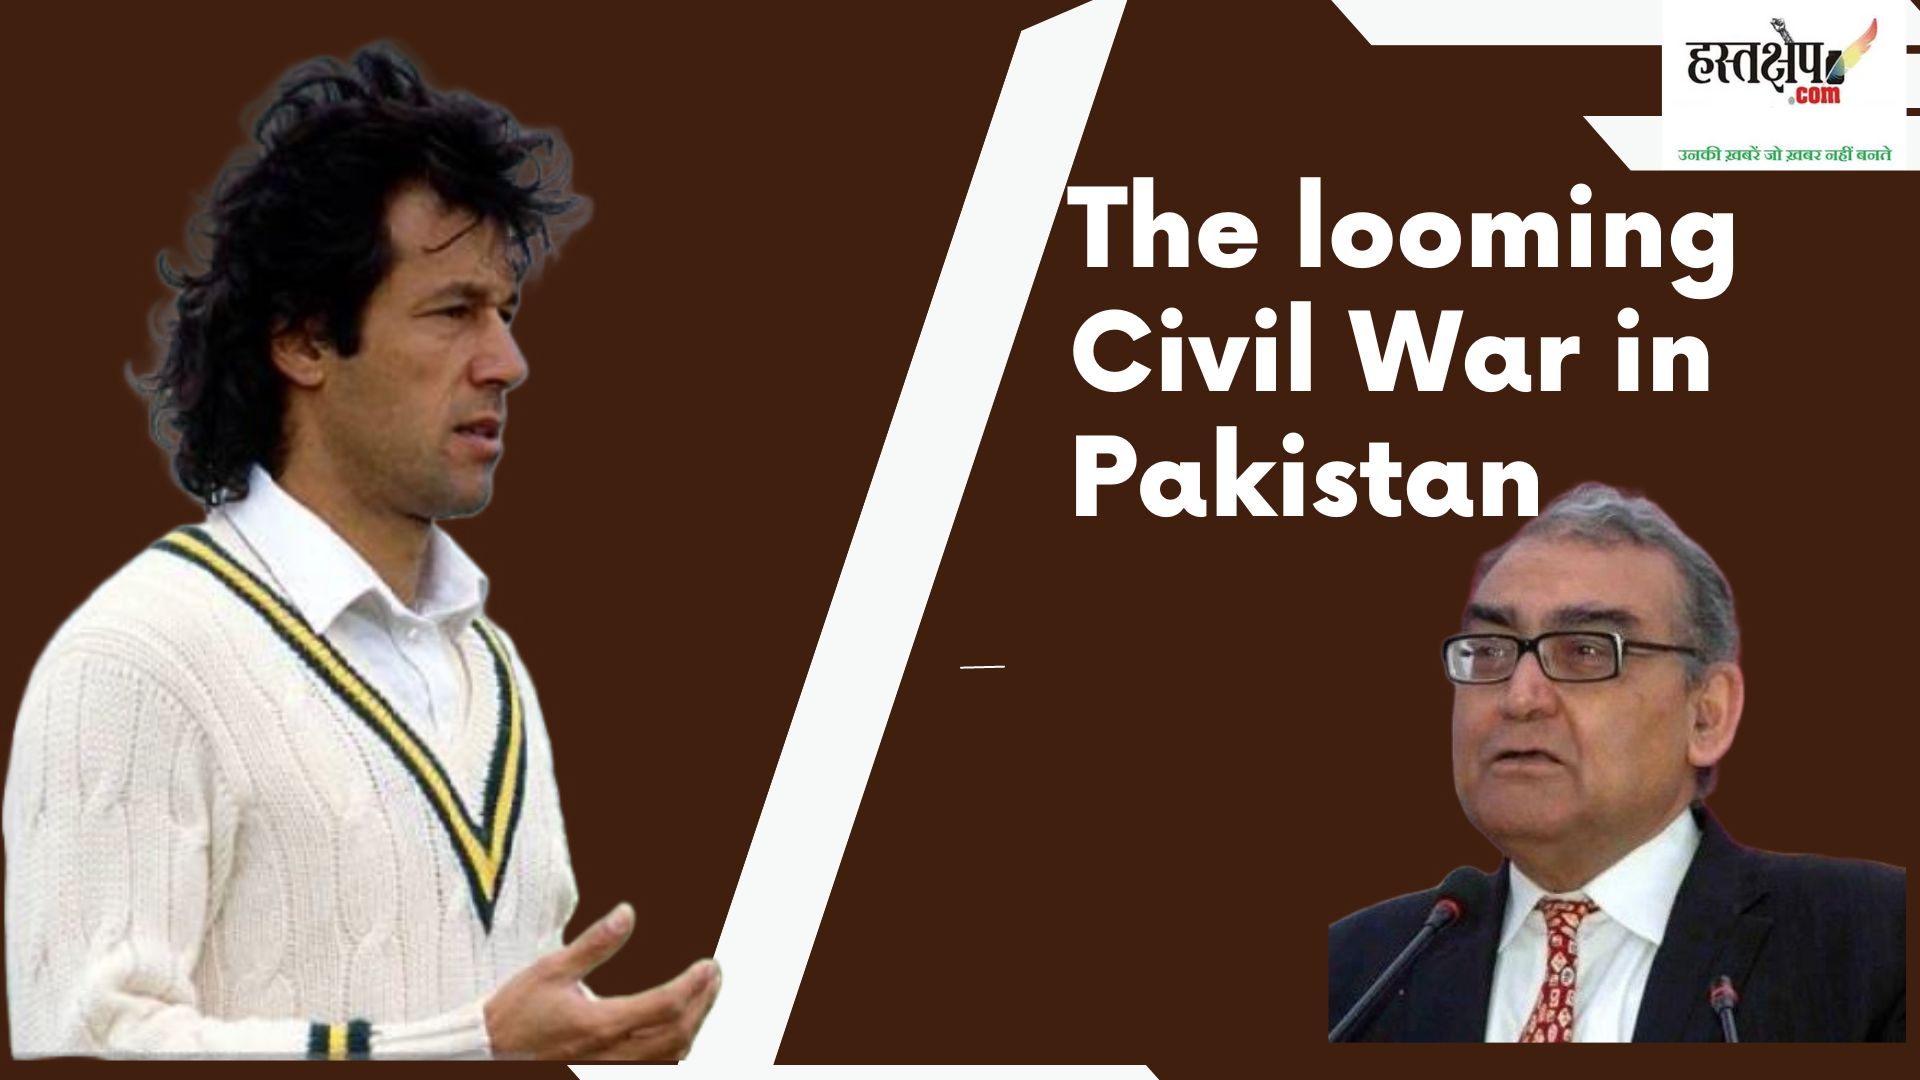 The looming Civil War in Pakistan: Justice Katju's article